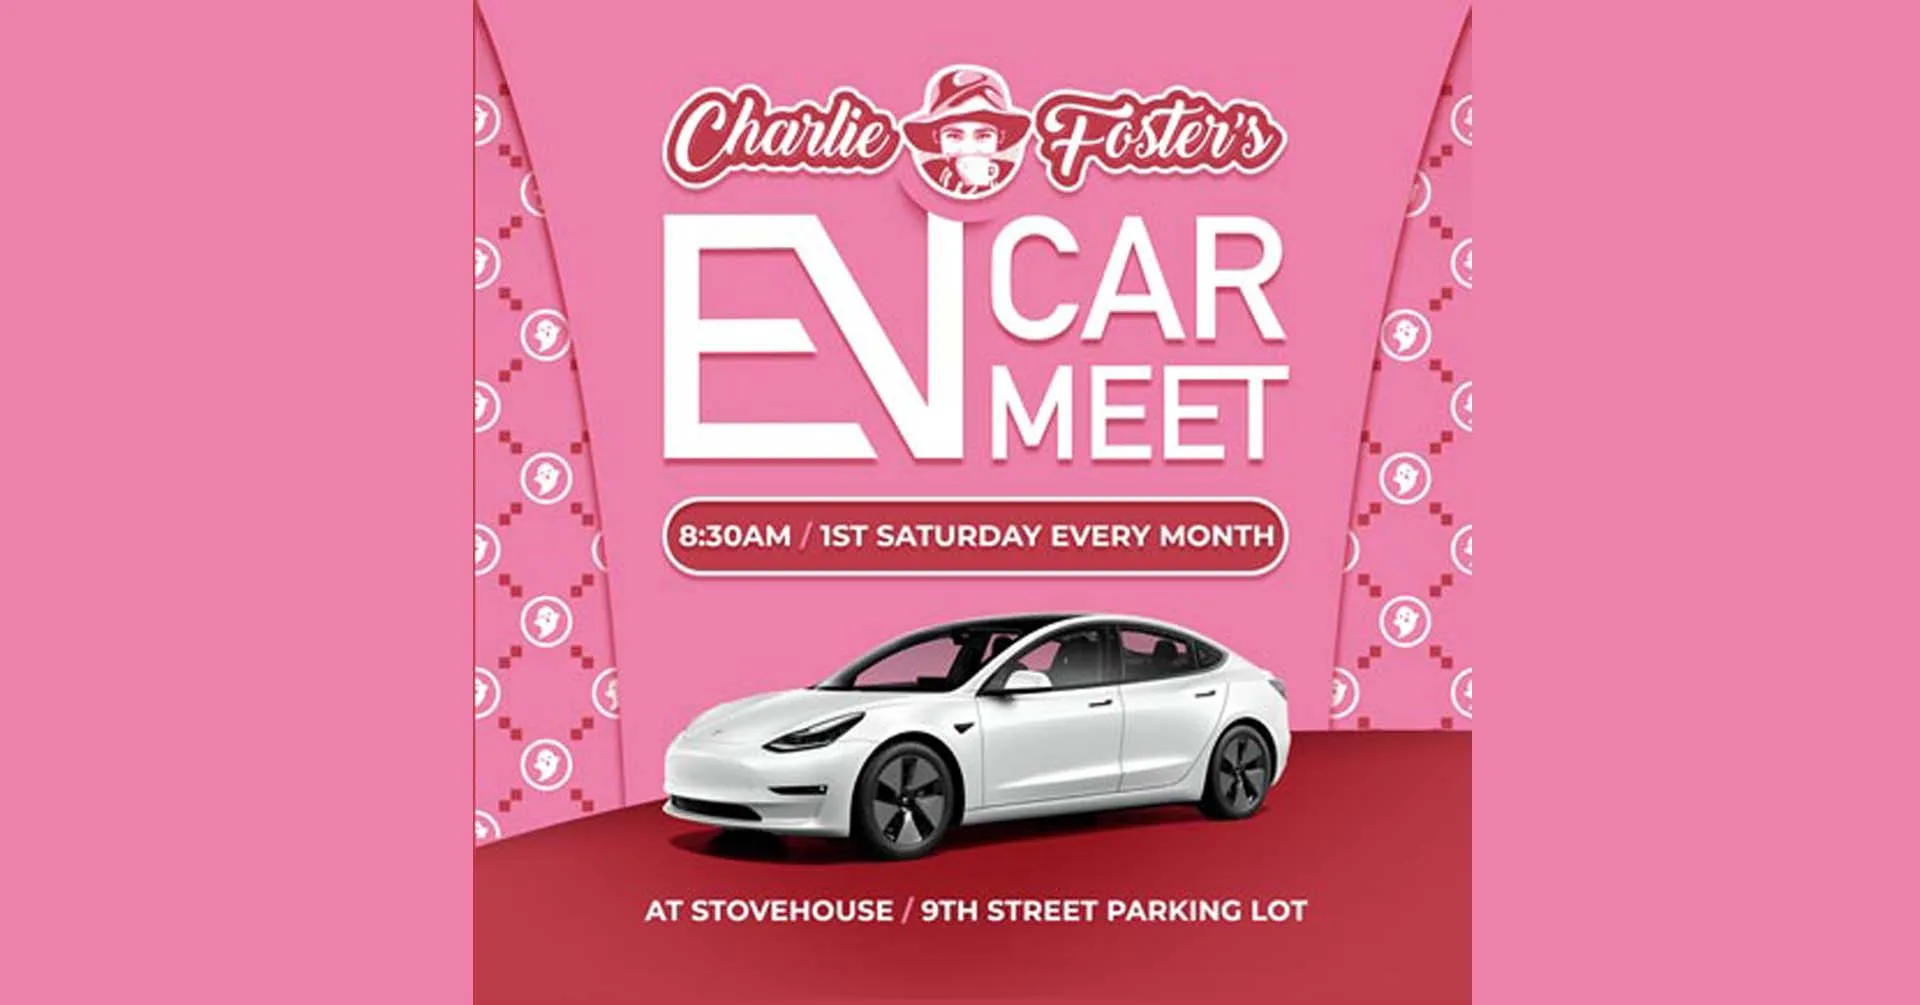 EV Car Meet at Charlie Foster’s